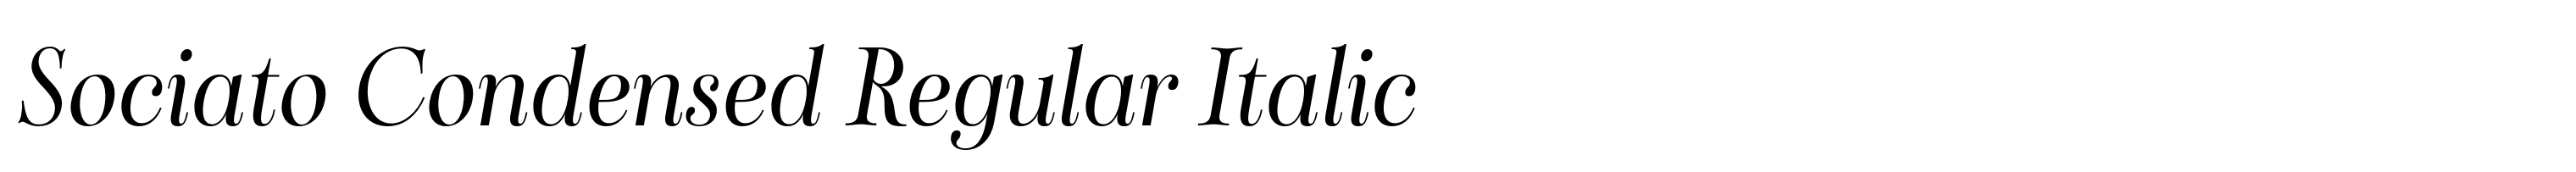 Sociato Condensed Regular Italic